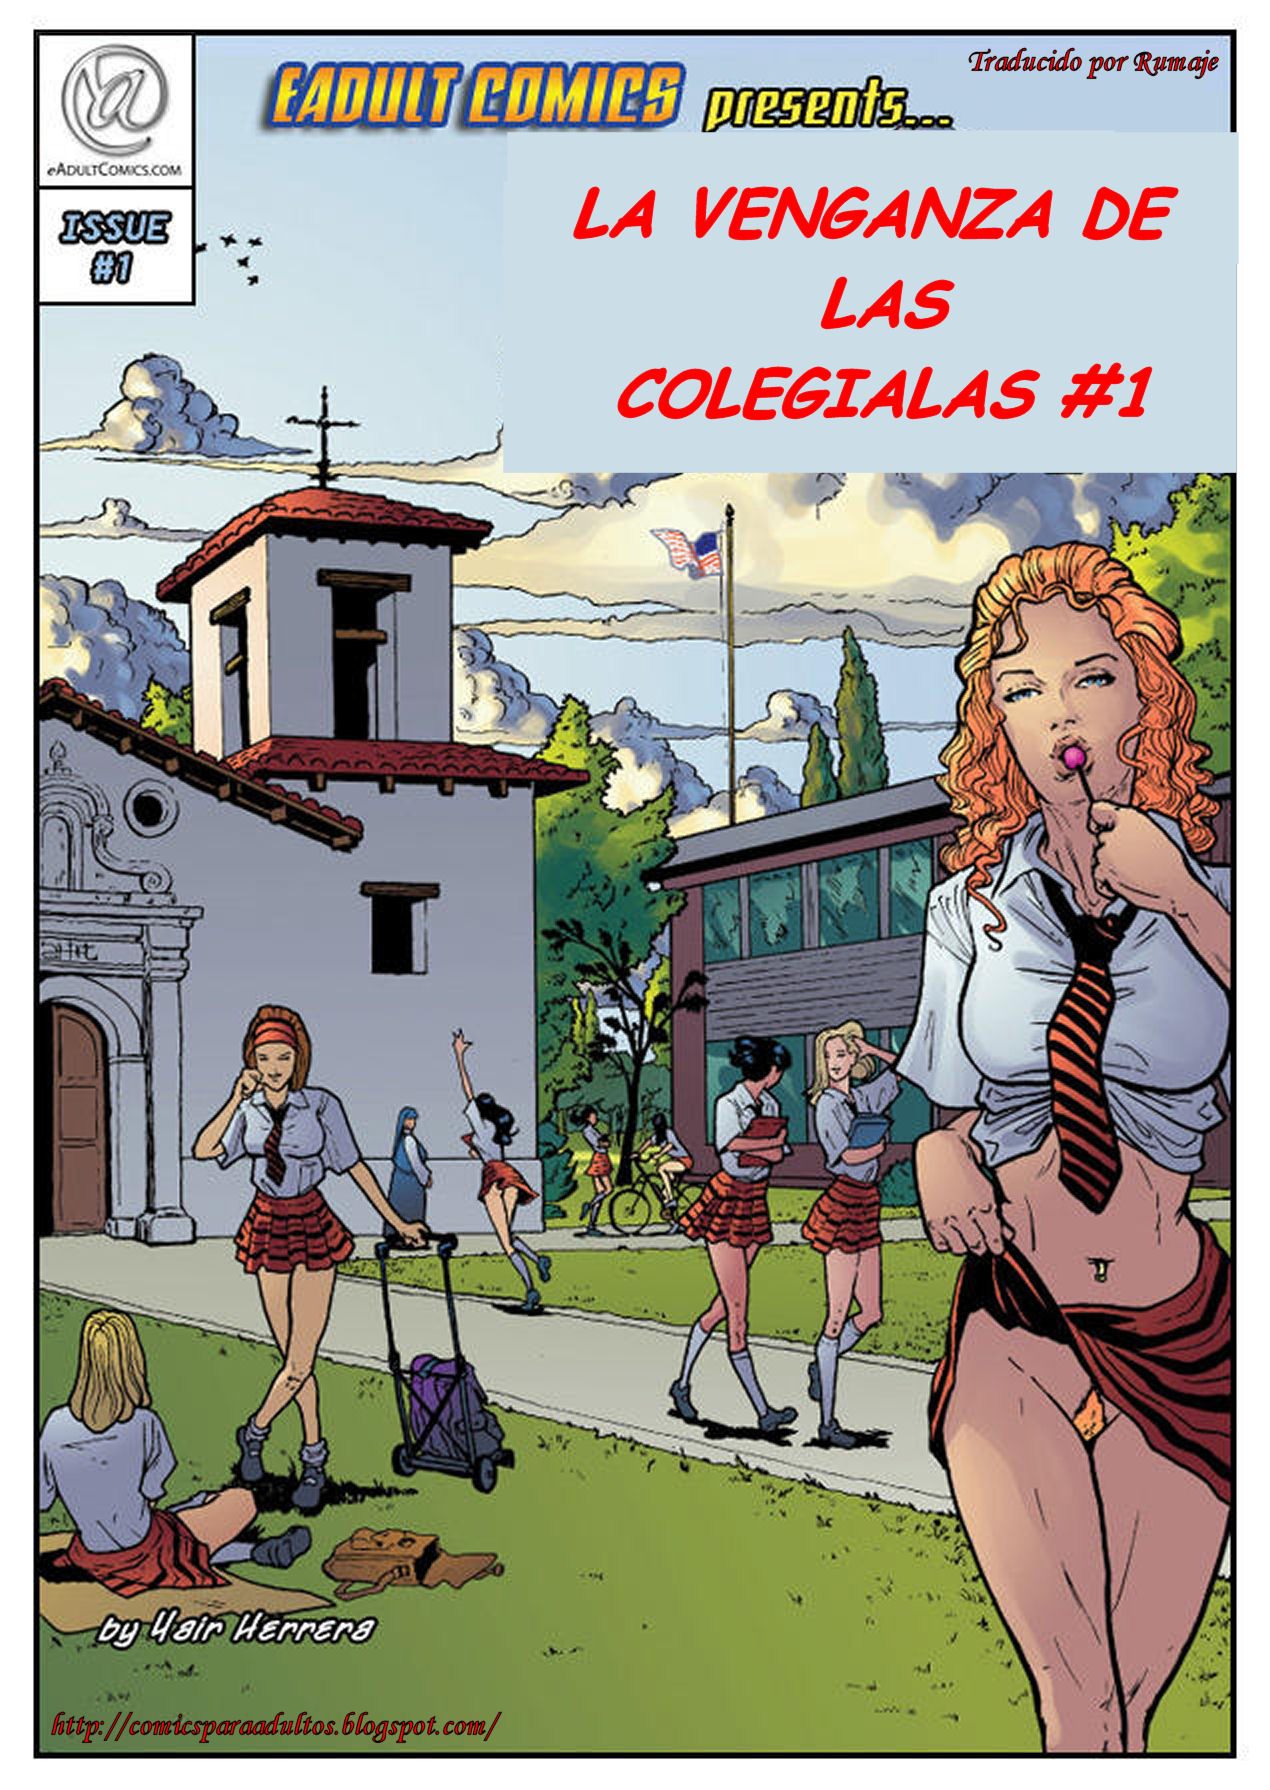 La Venganza de la Colegiales vol 1 Spanish Espanol 165193 0001